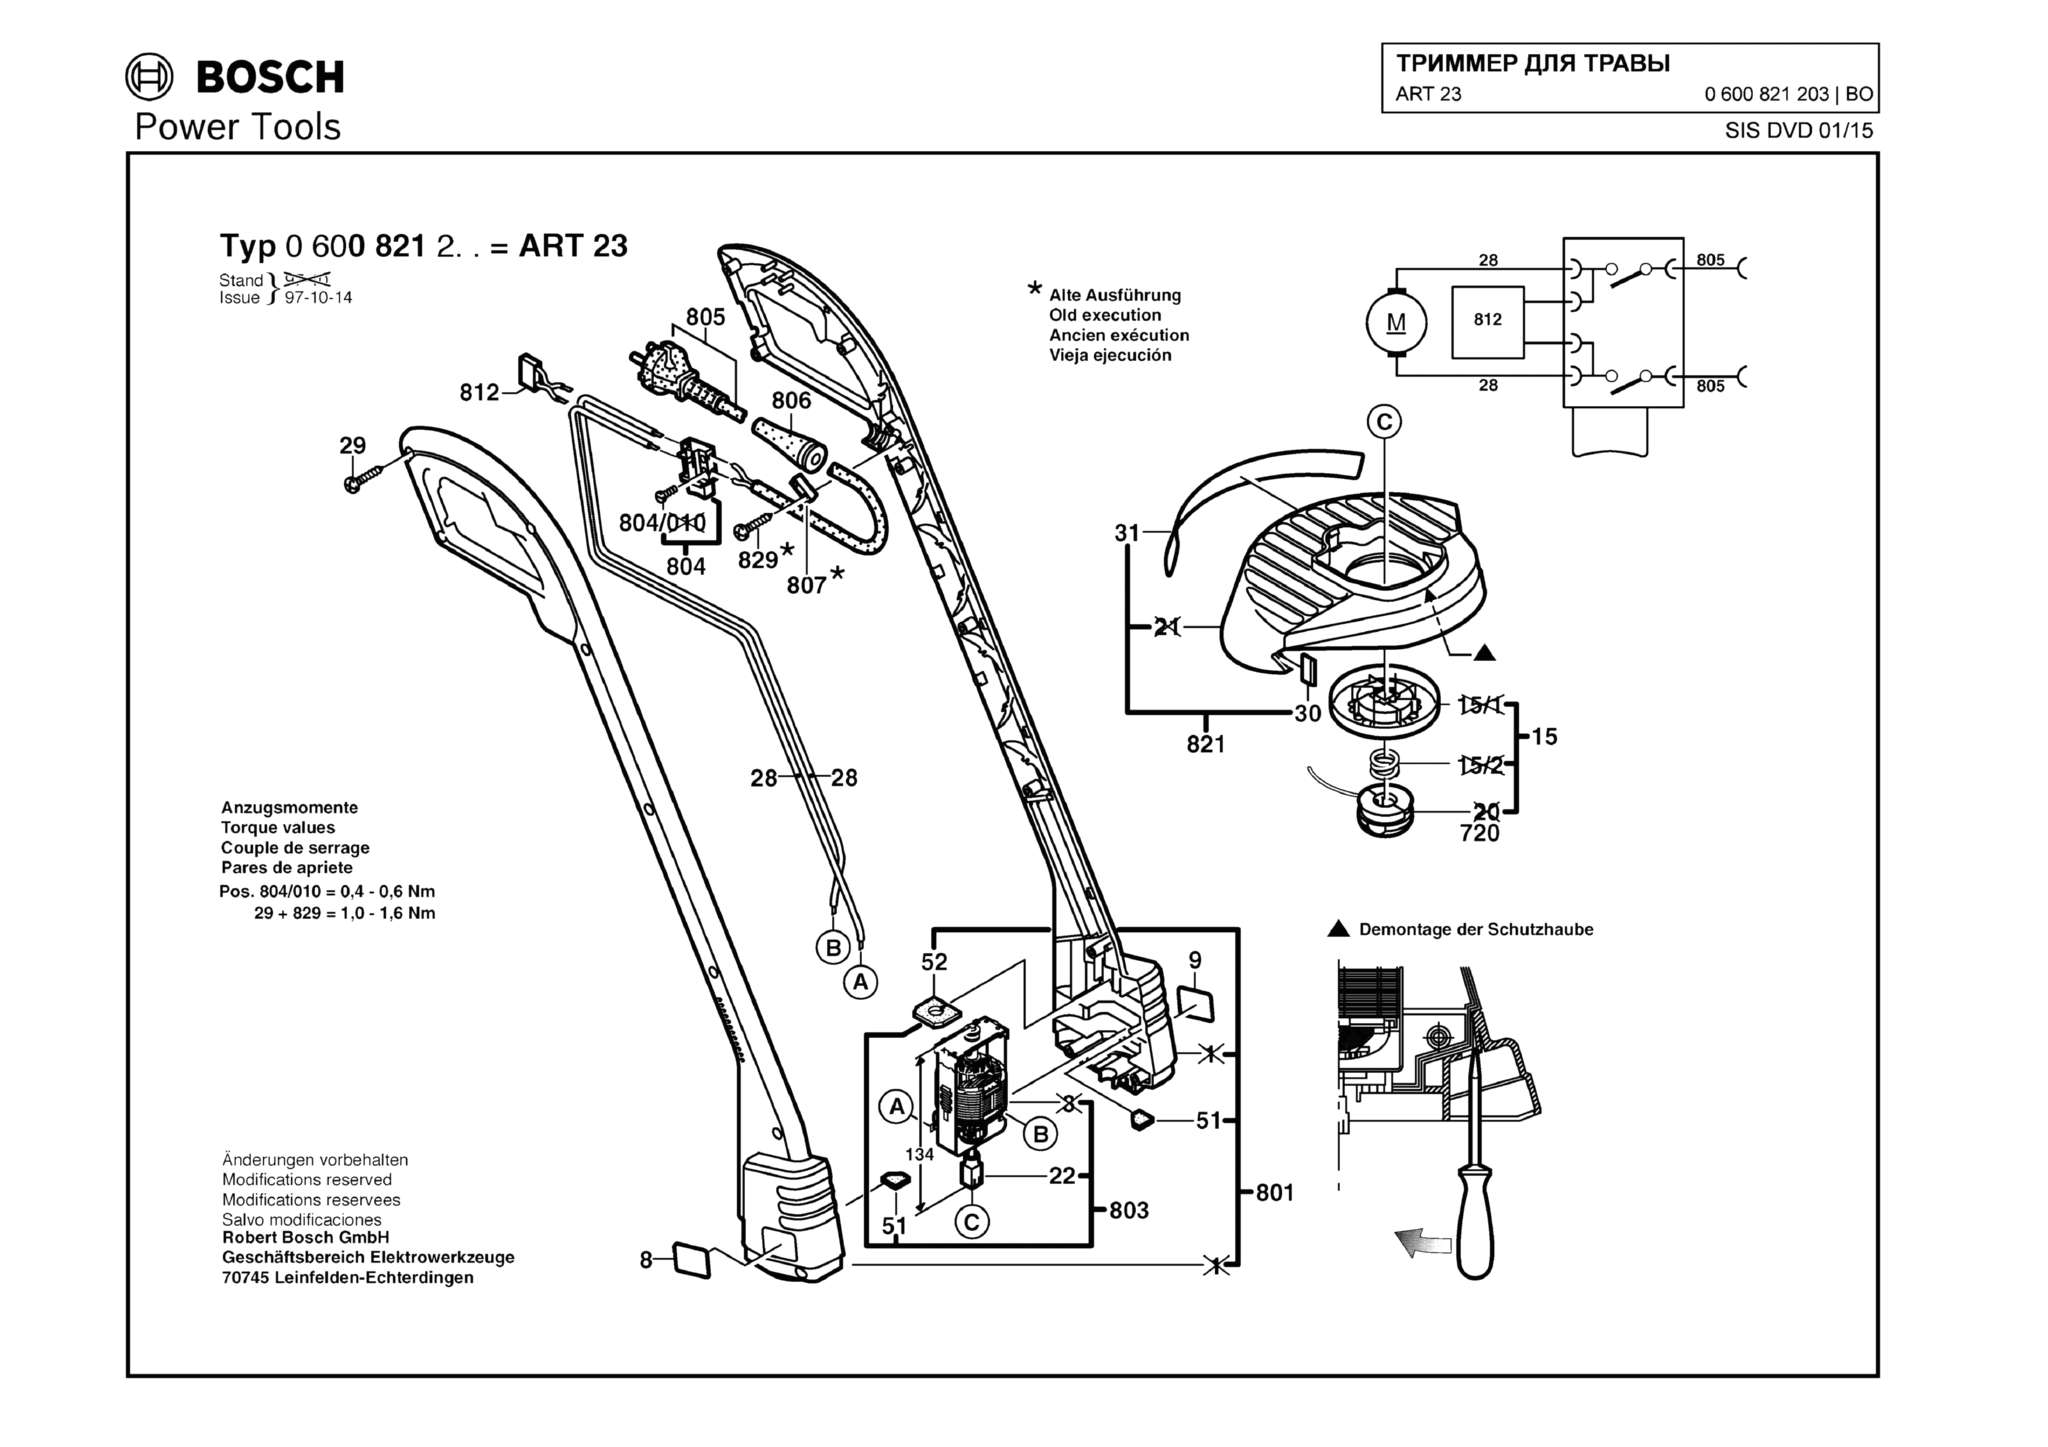 Запчасти, схема и деталировка Bosch ART 23 (ТИП 0600821203)